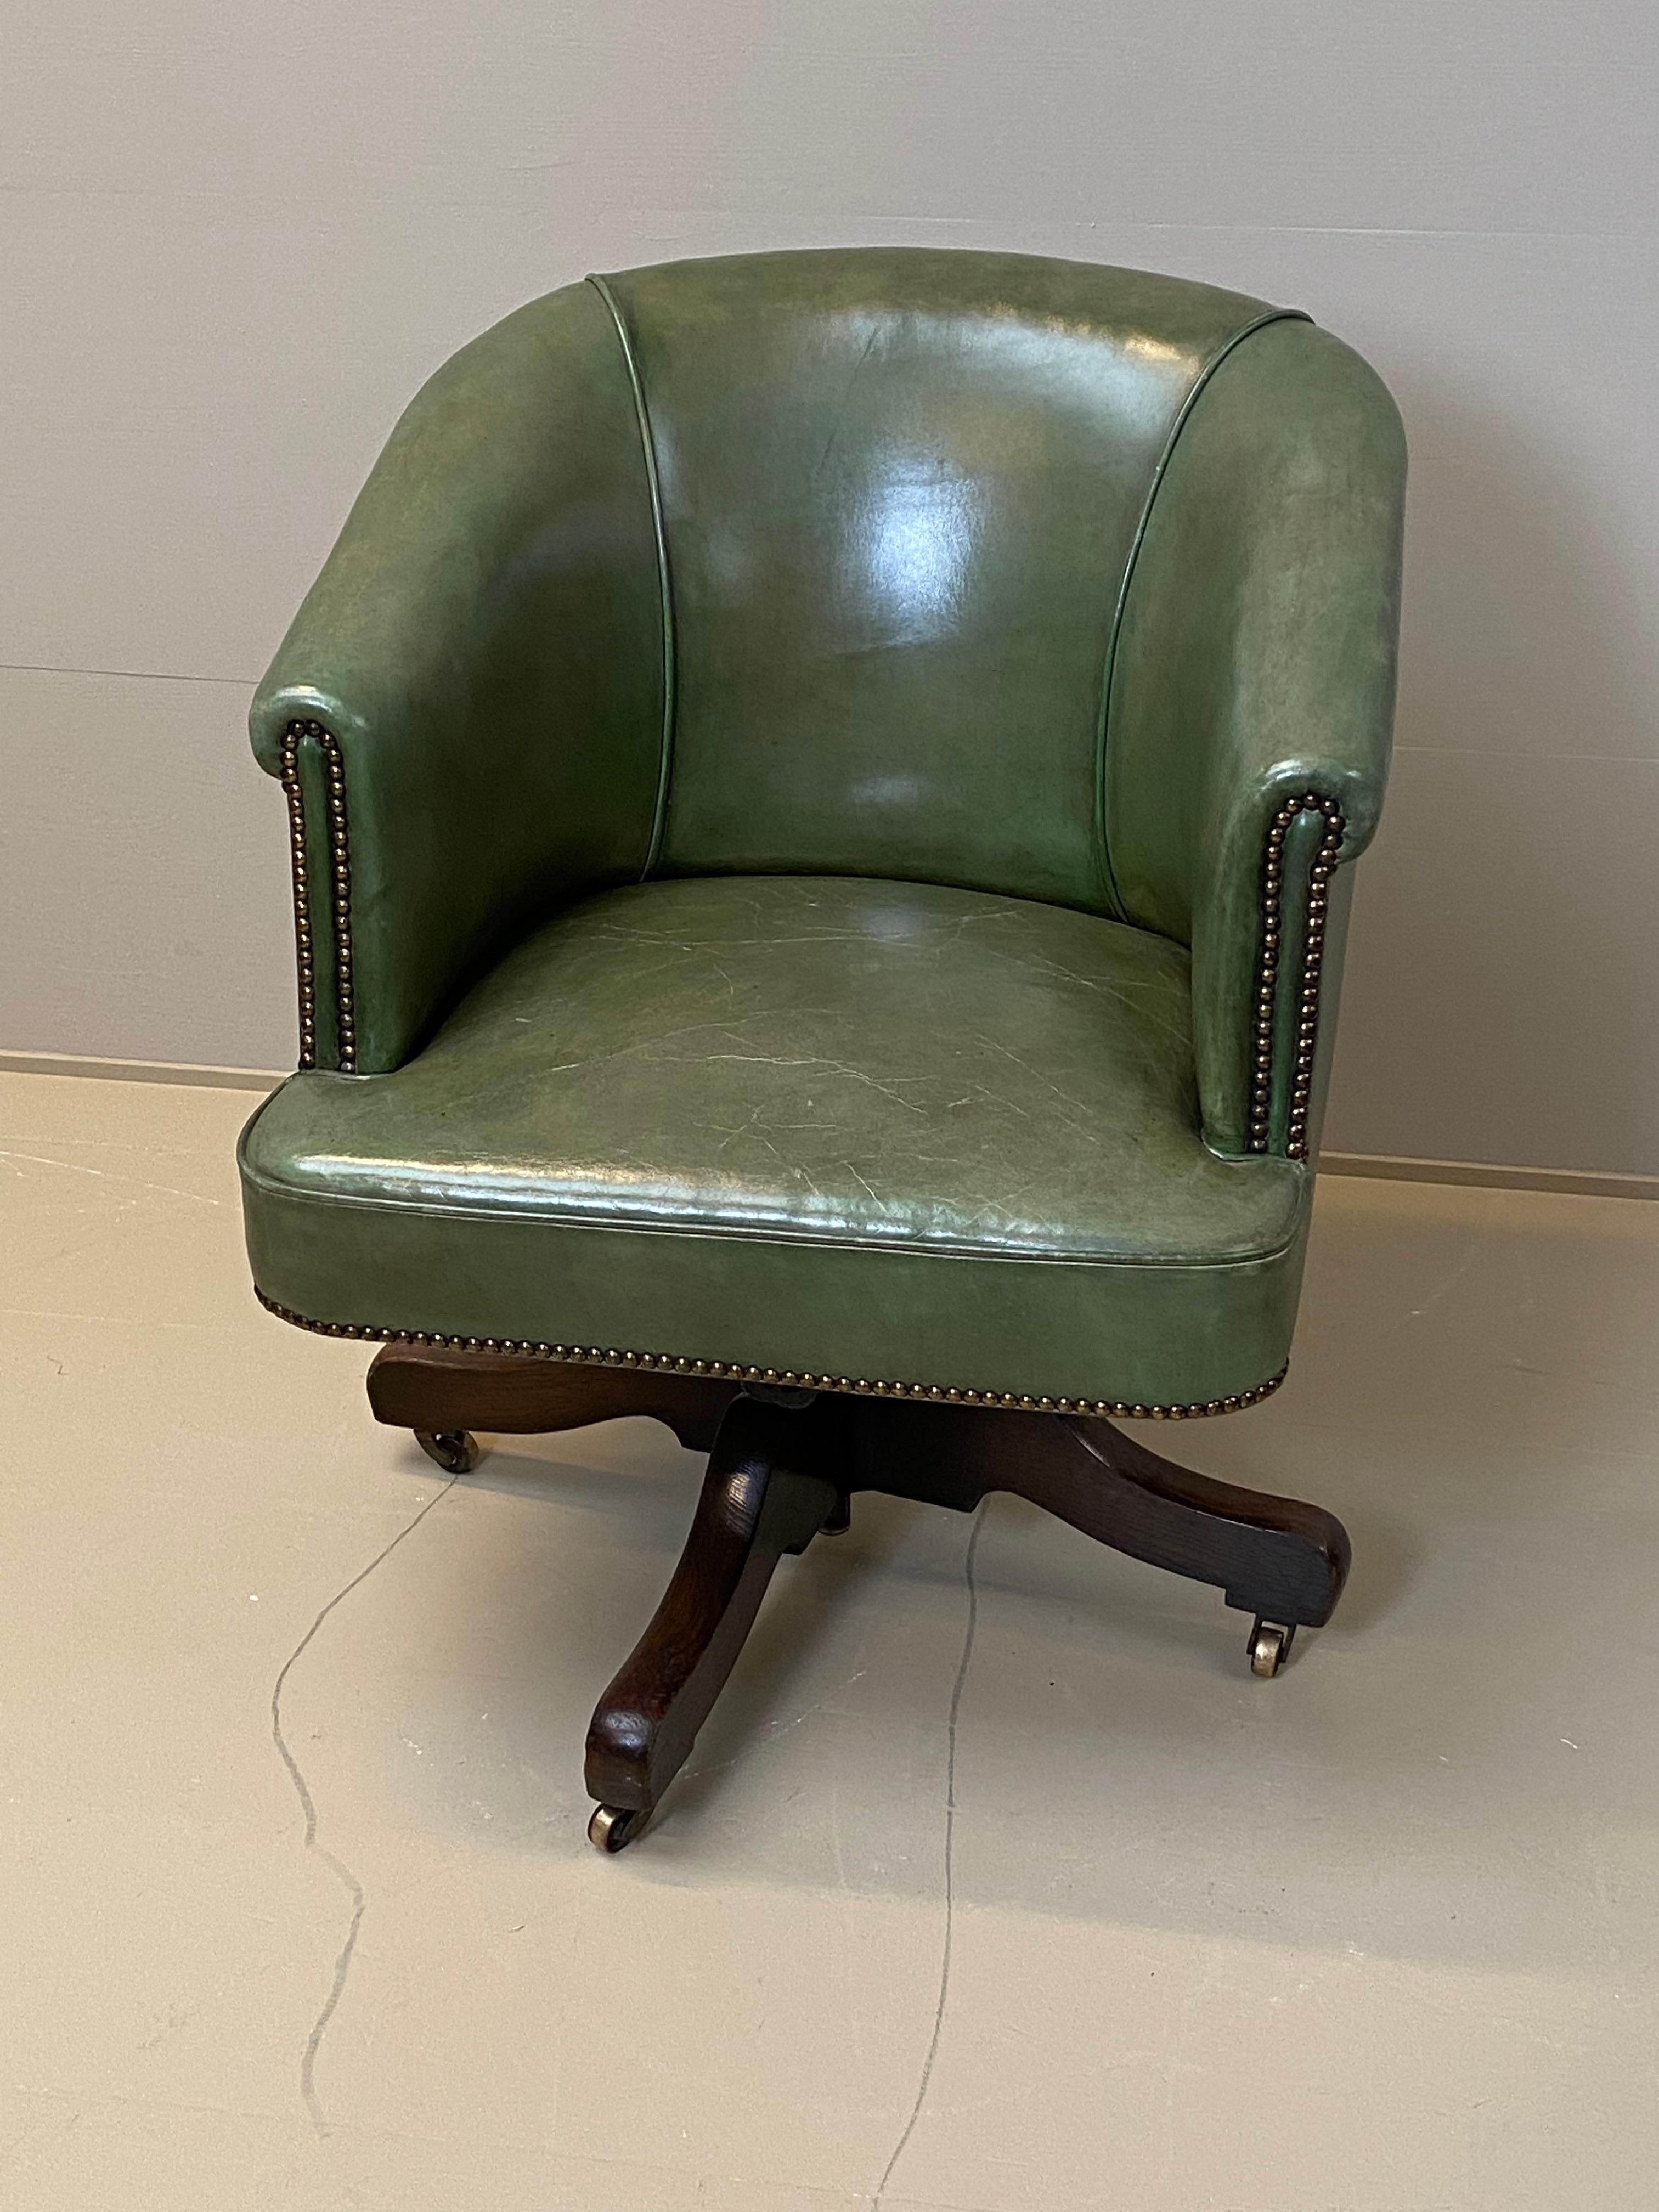 Beautiful Patinated English Bureau chair,
Rotating mechanism,
Beautiful patinated green leather.